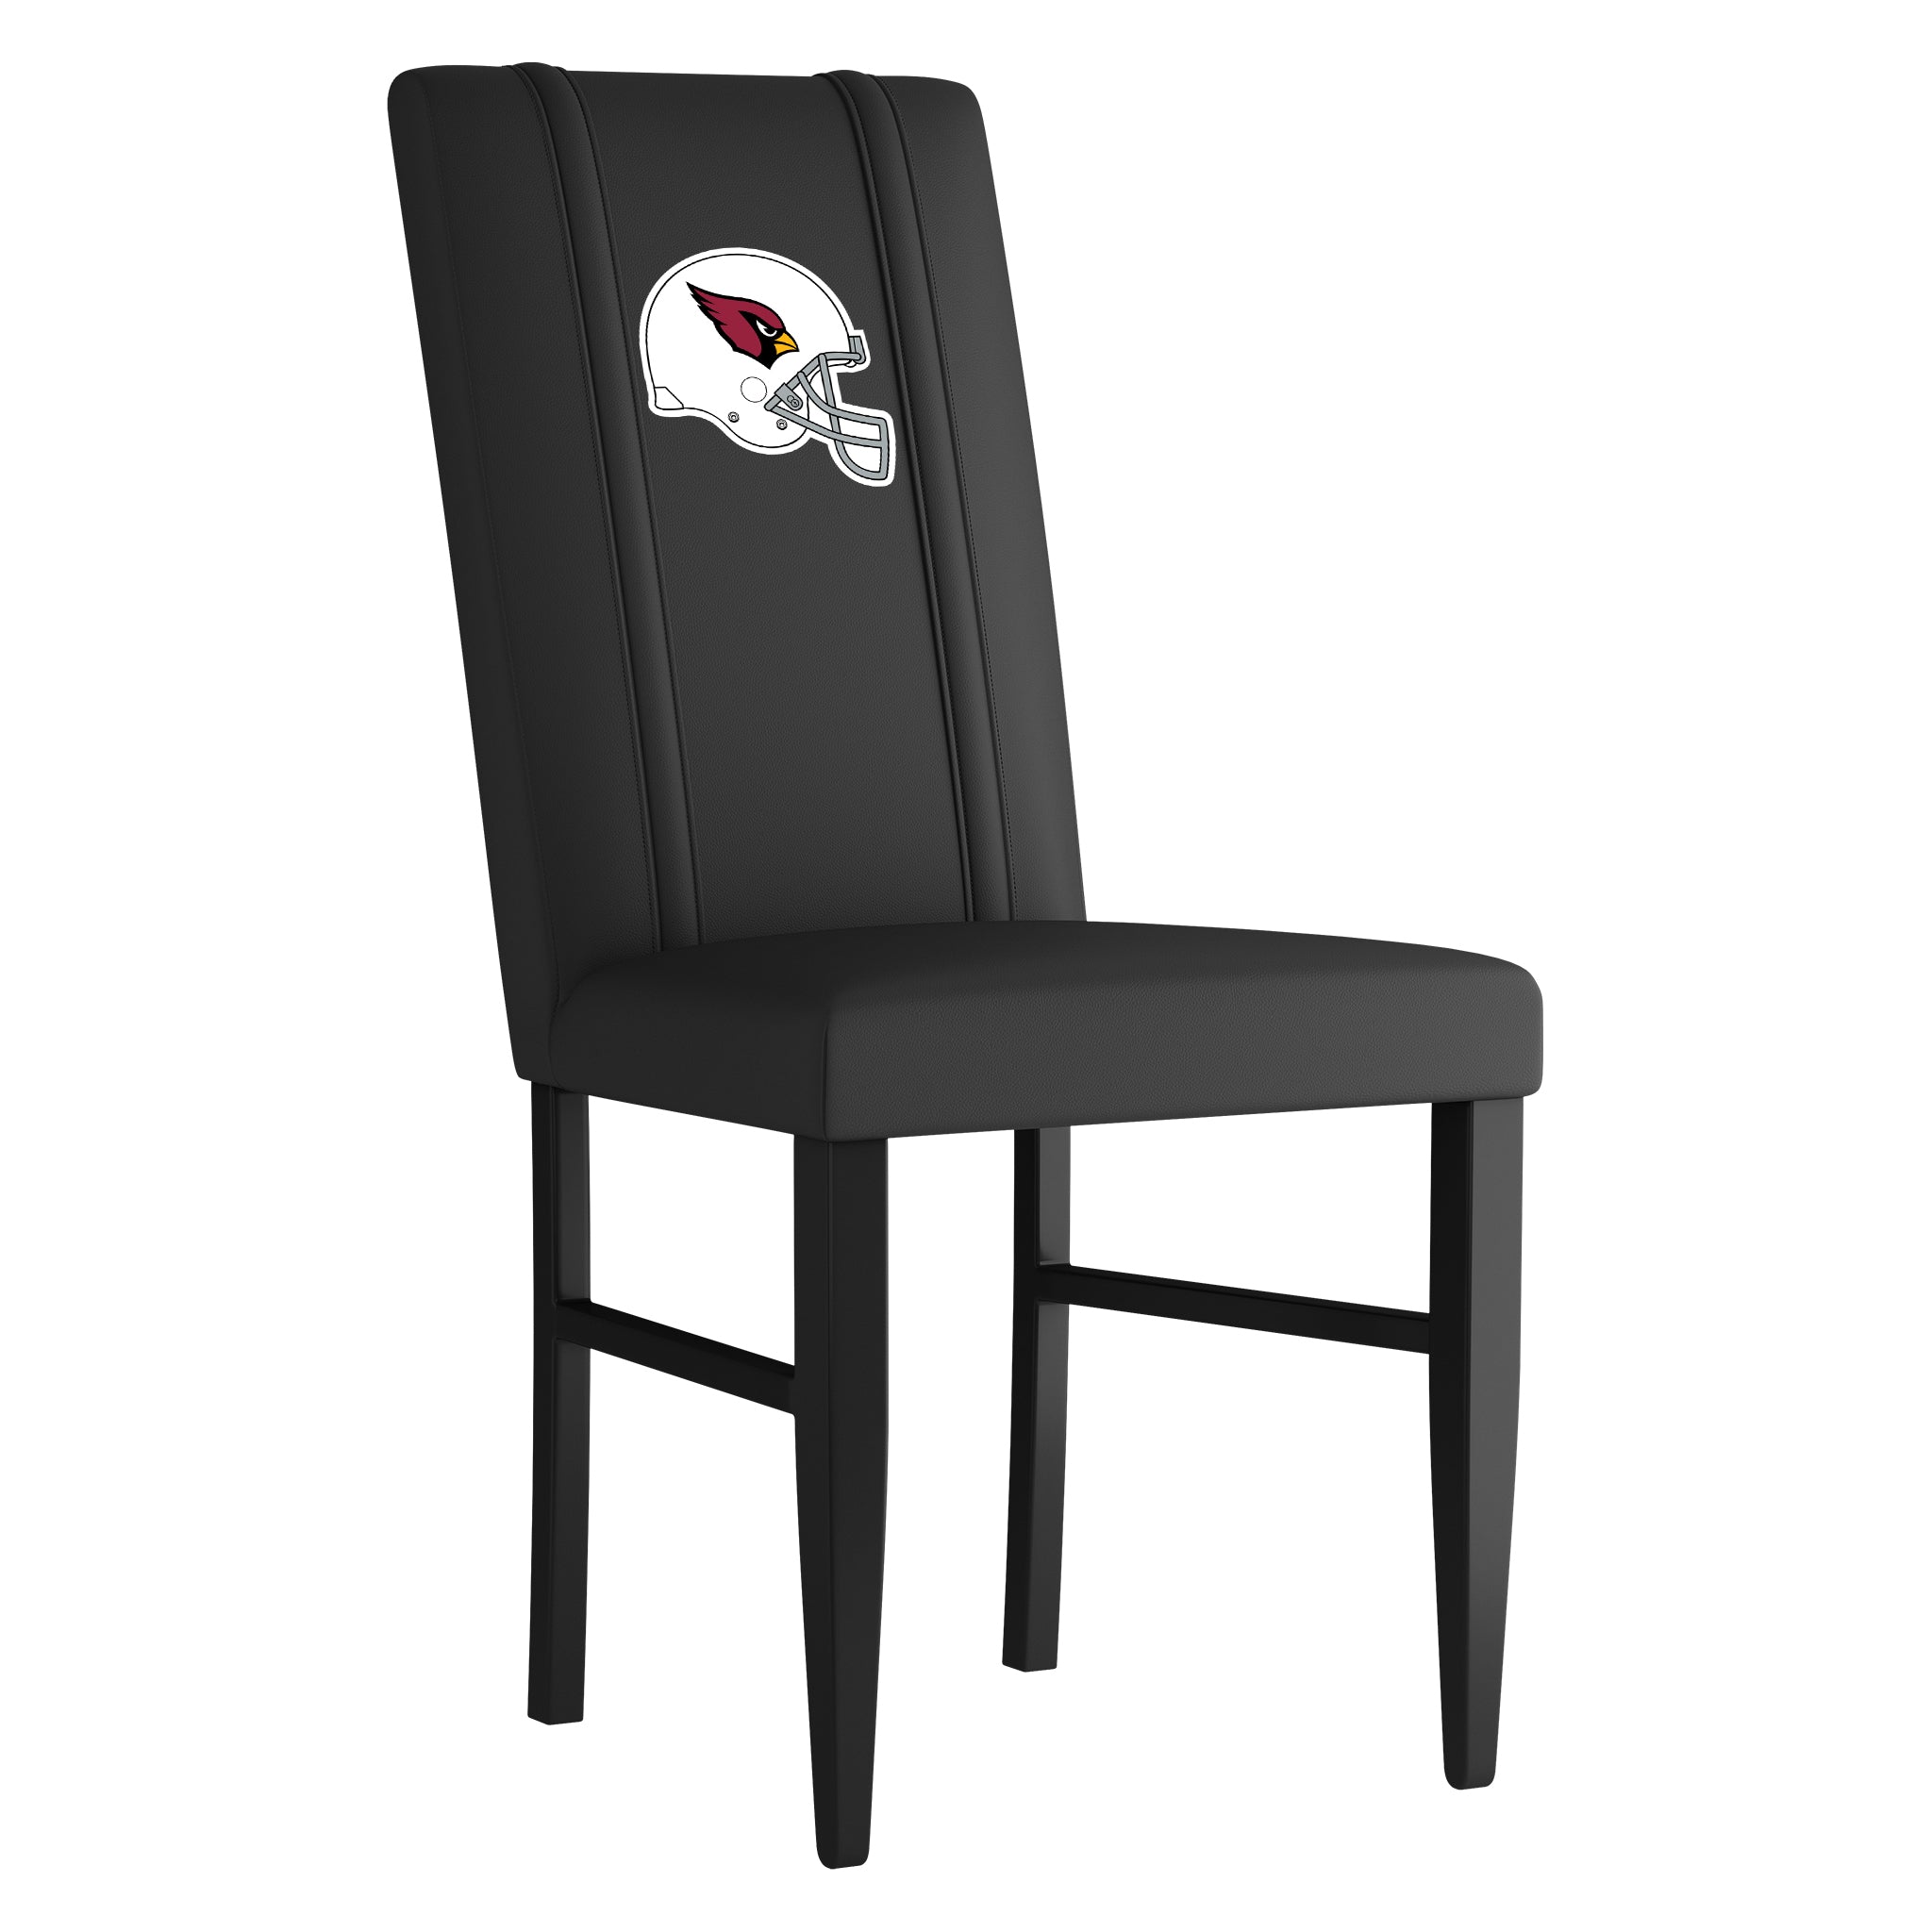 Arizona Cardinals Side Chair 2000